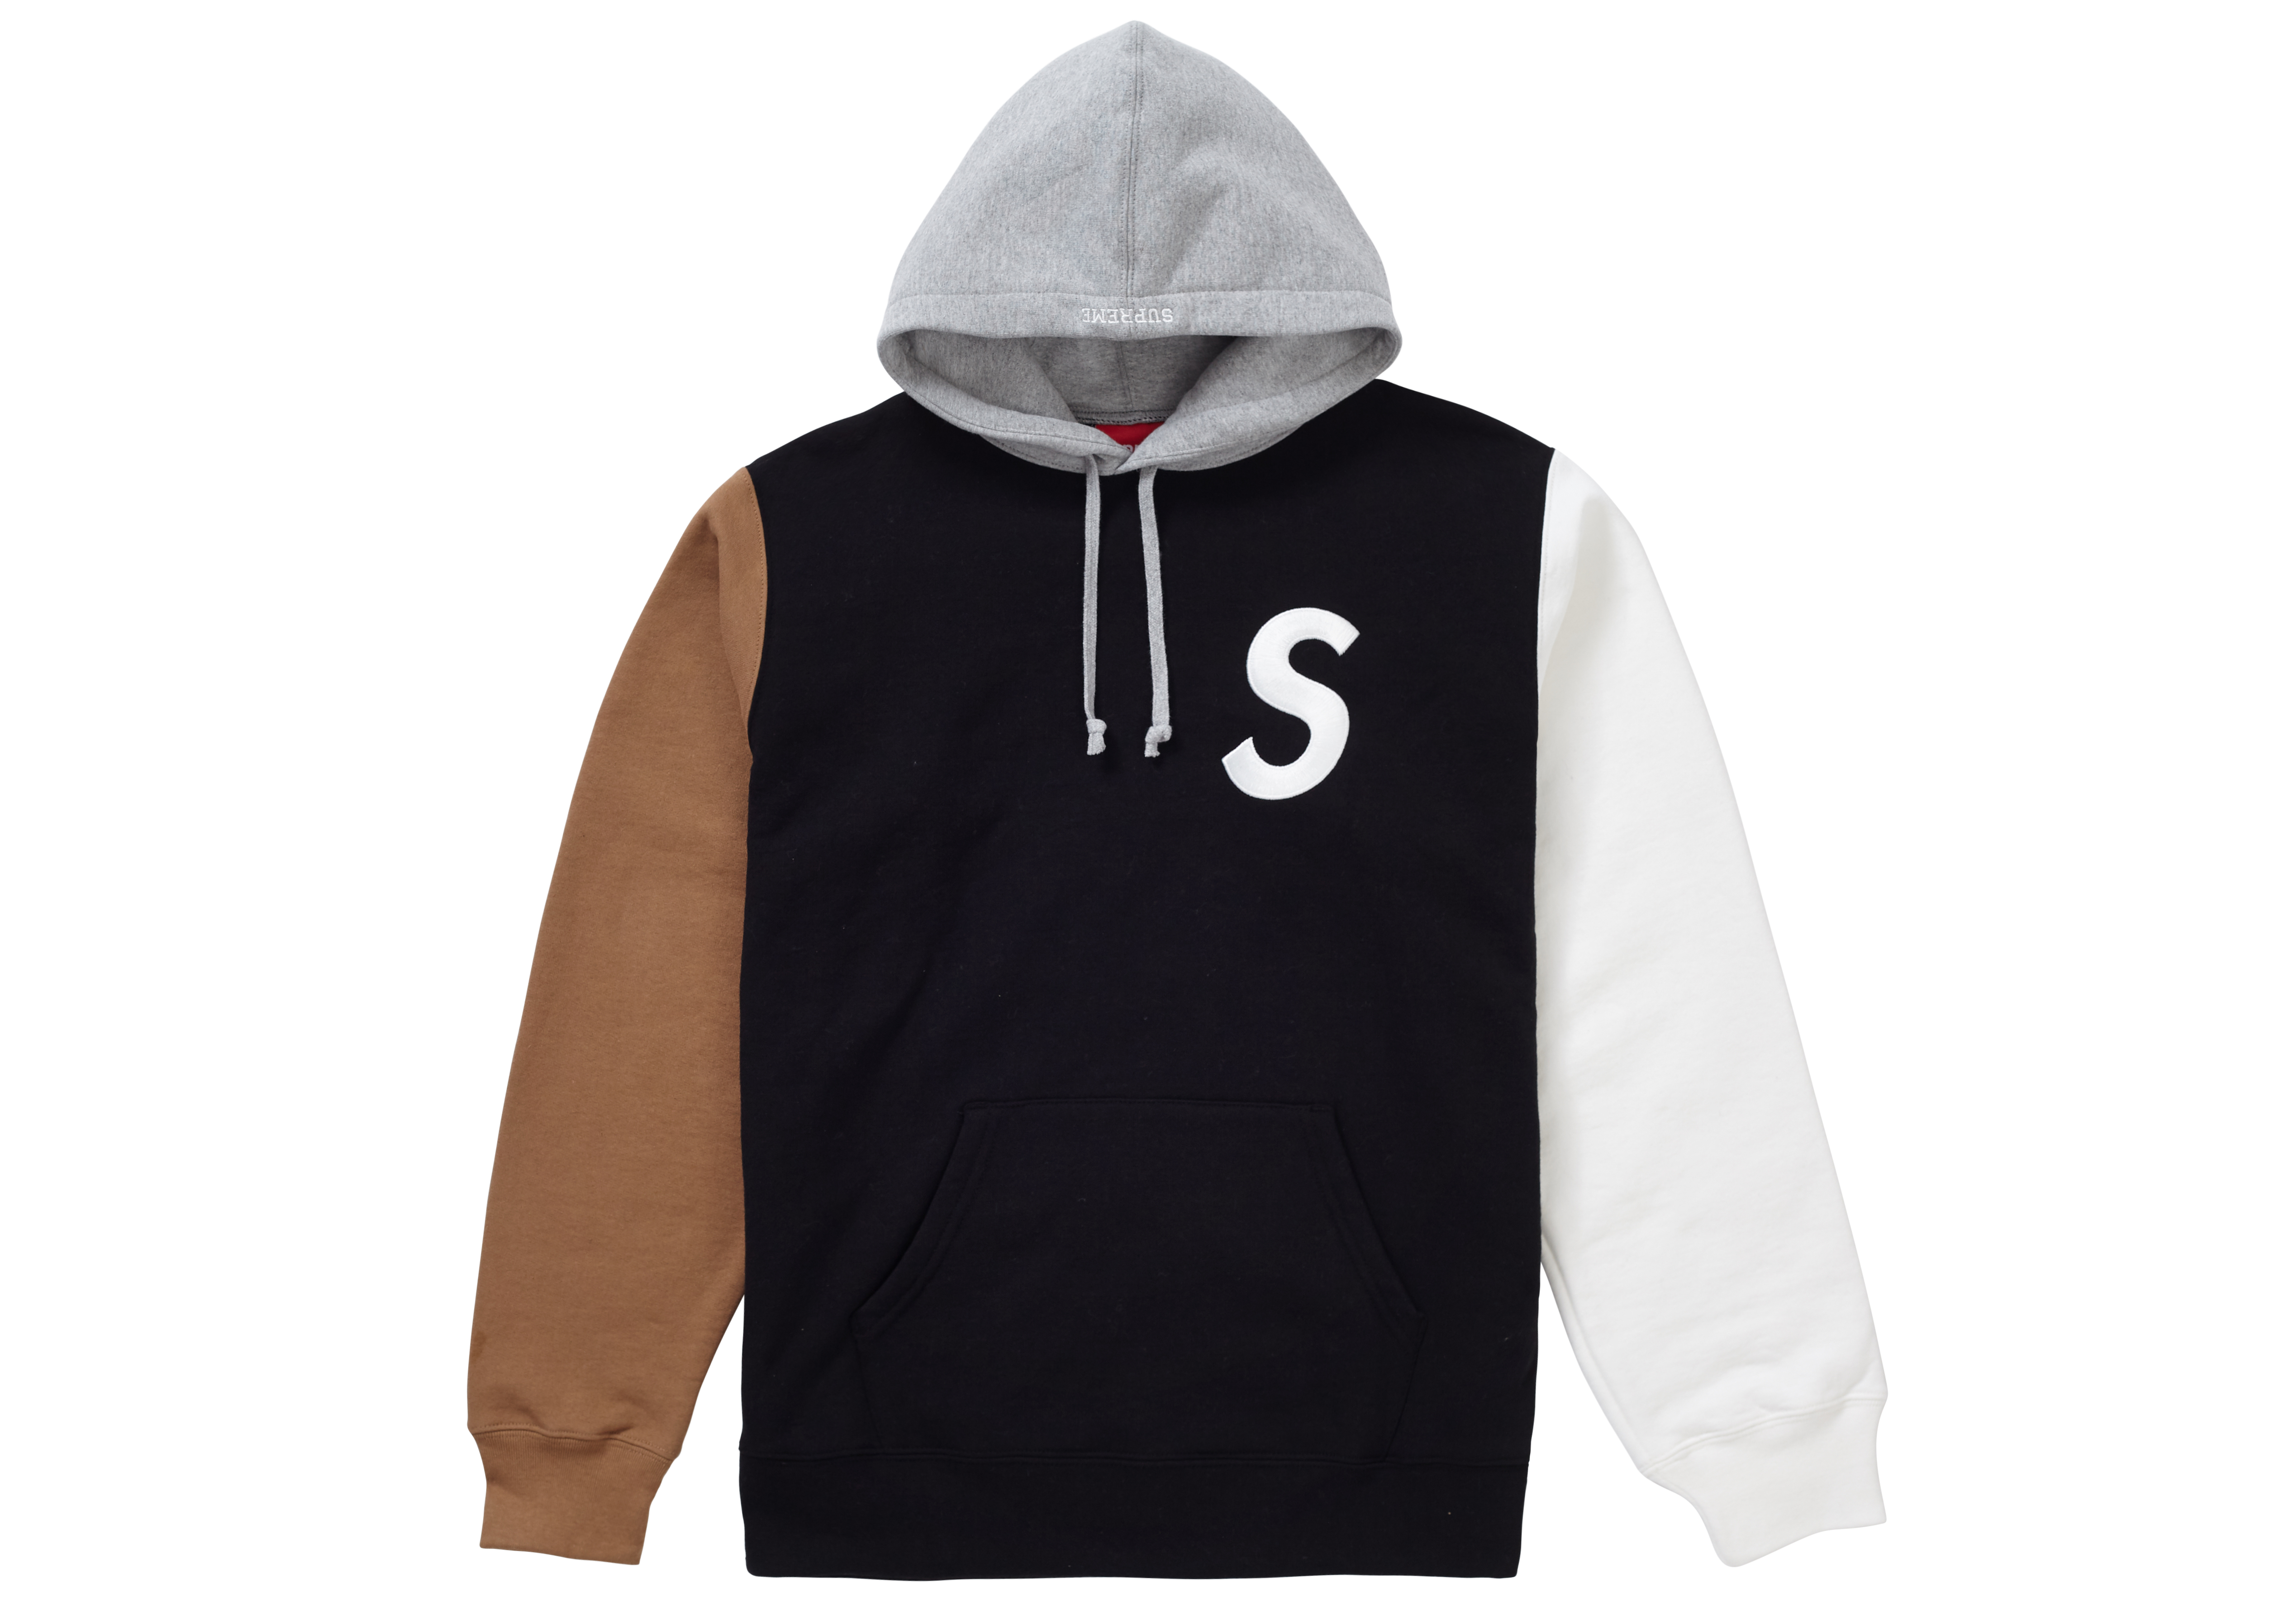 S Logo Colorblocked Hooded Sweatshirt